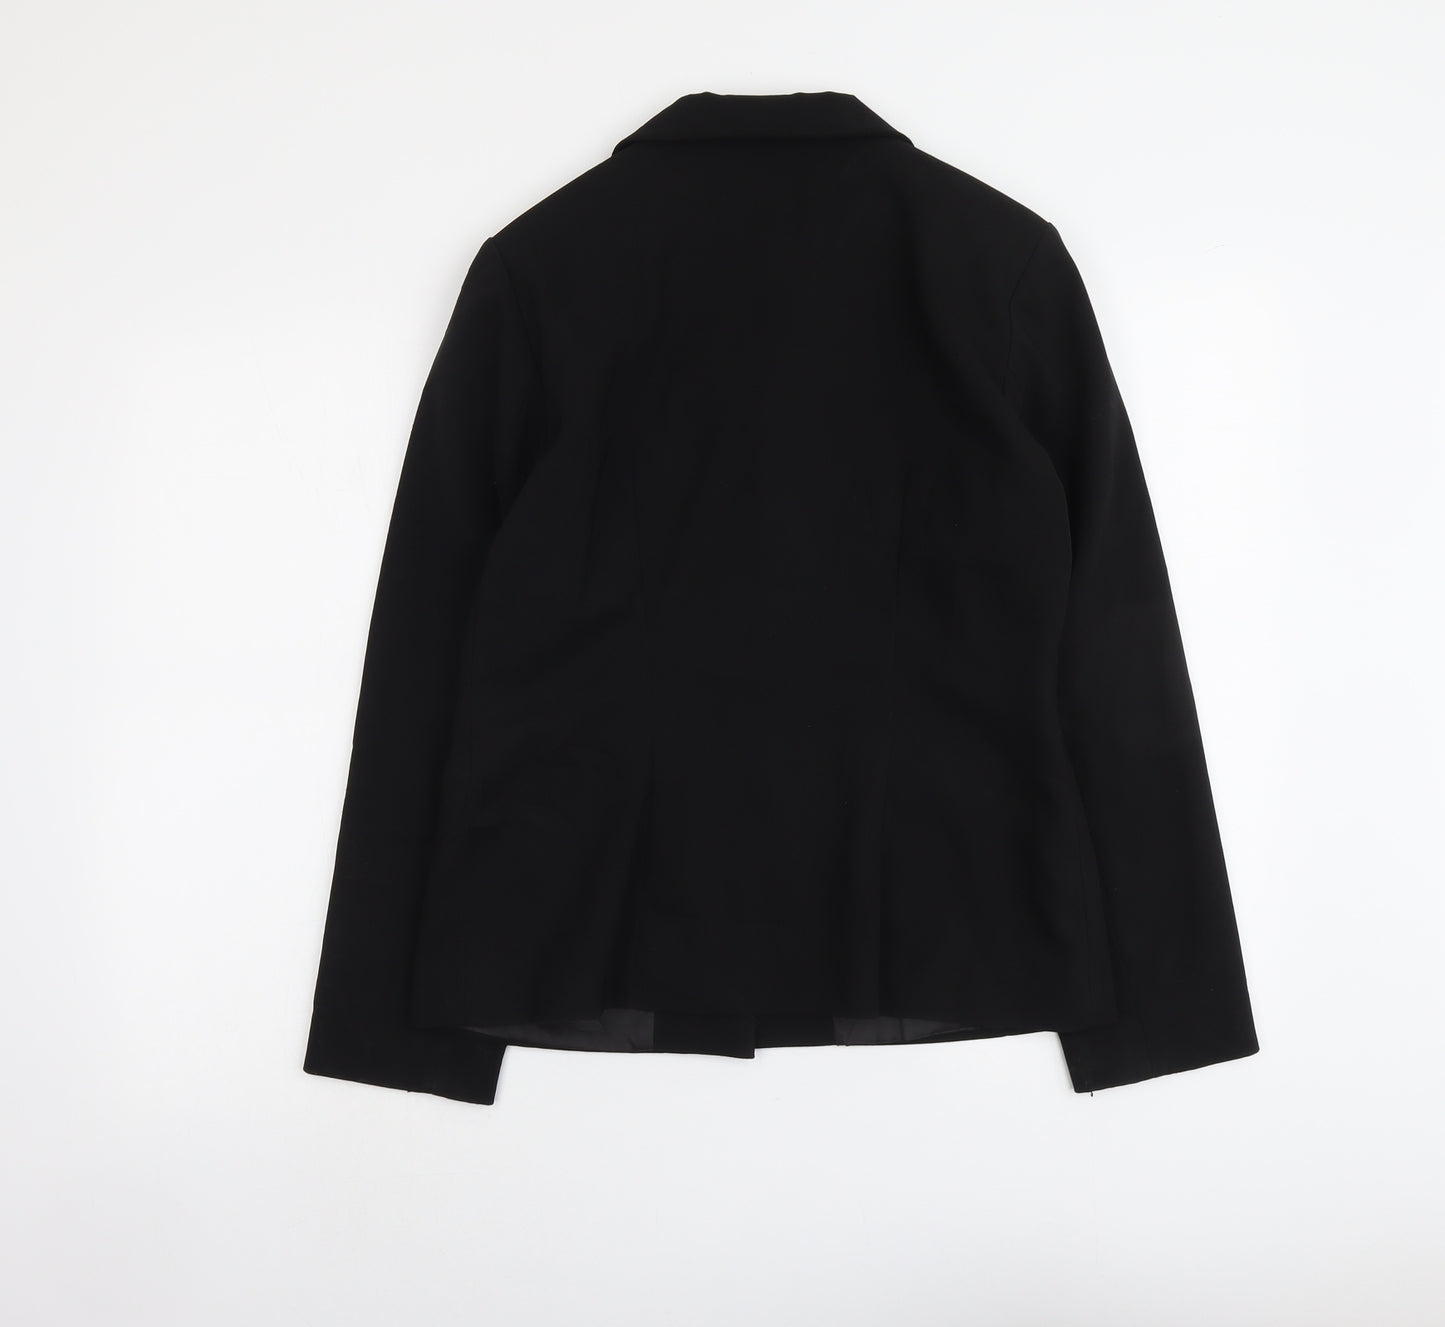 Cortelle Womens Black Polyester Jacket Suit Jacket Size 14